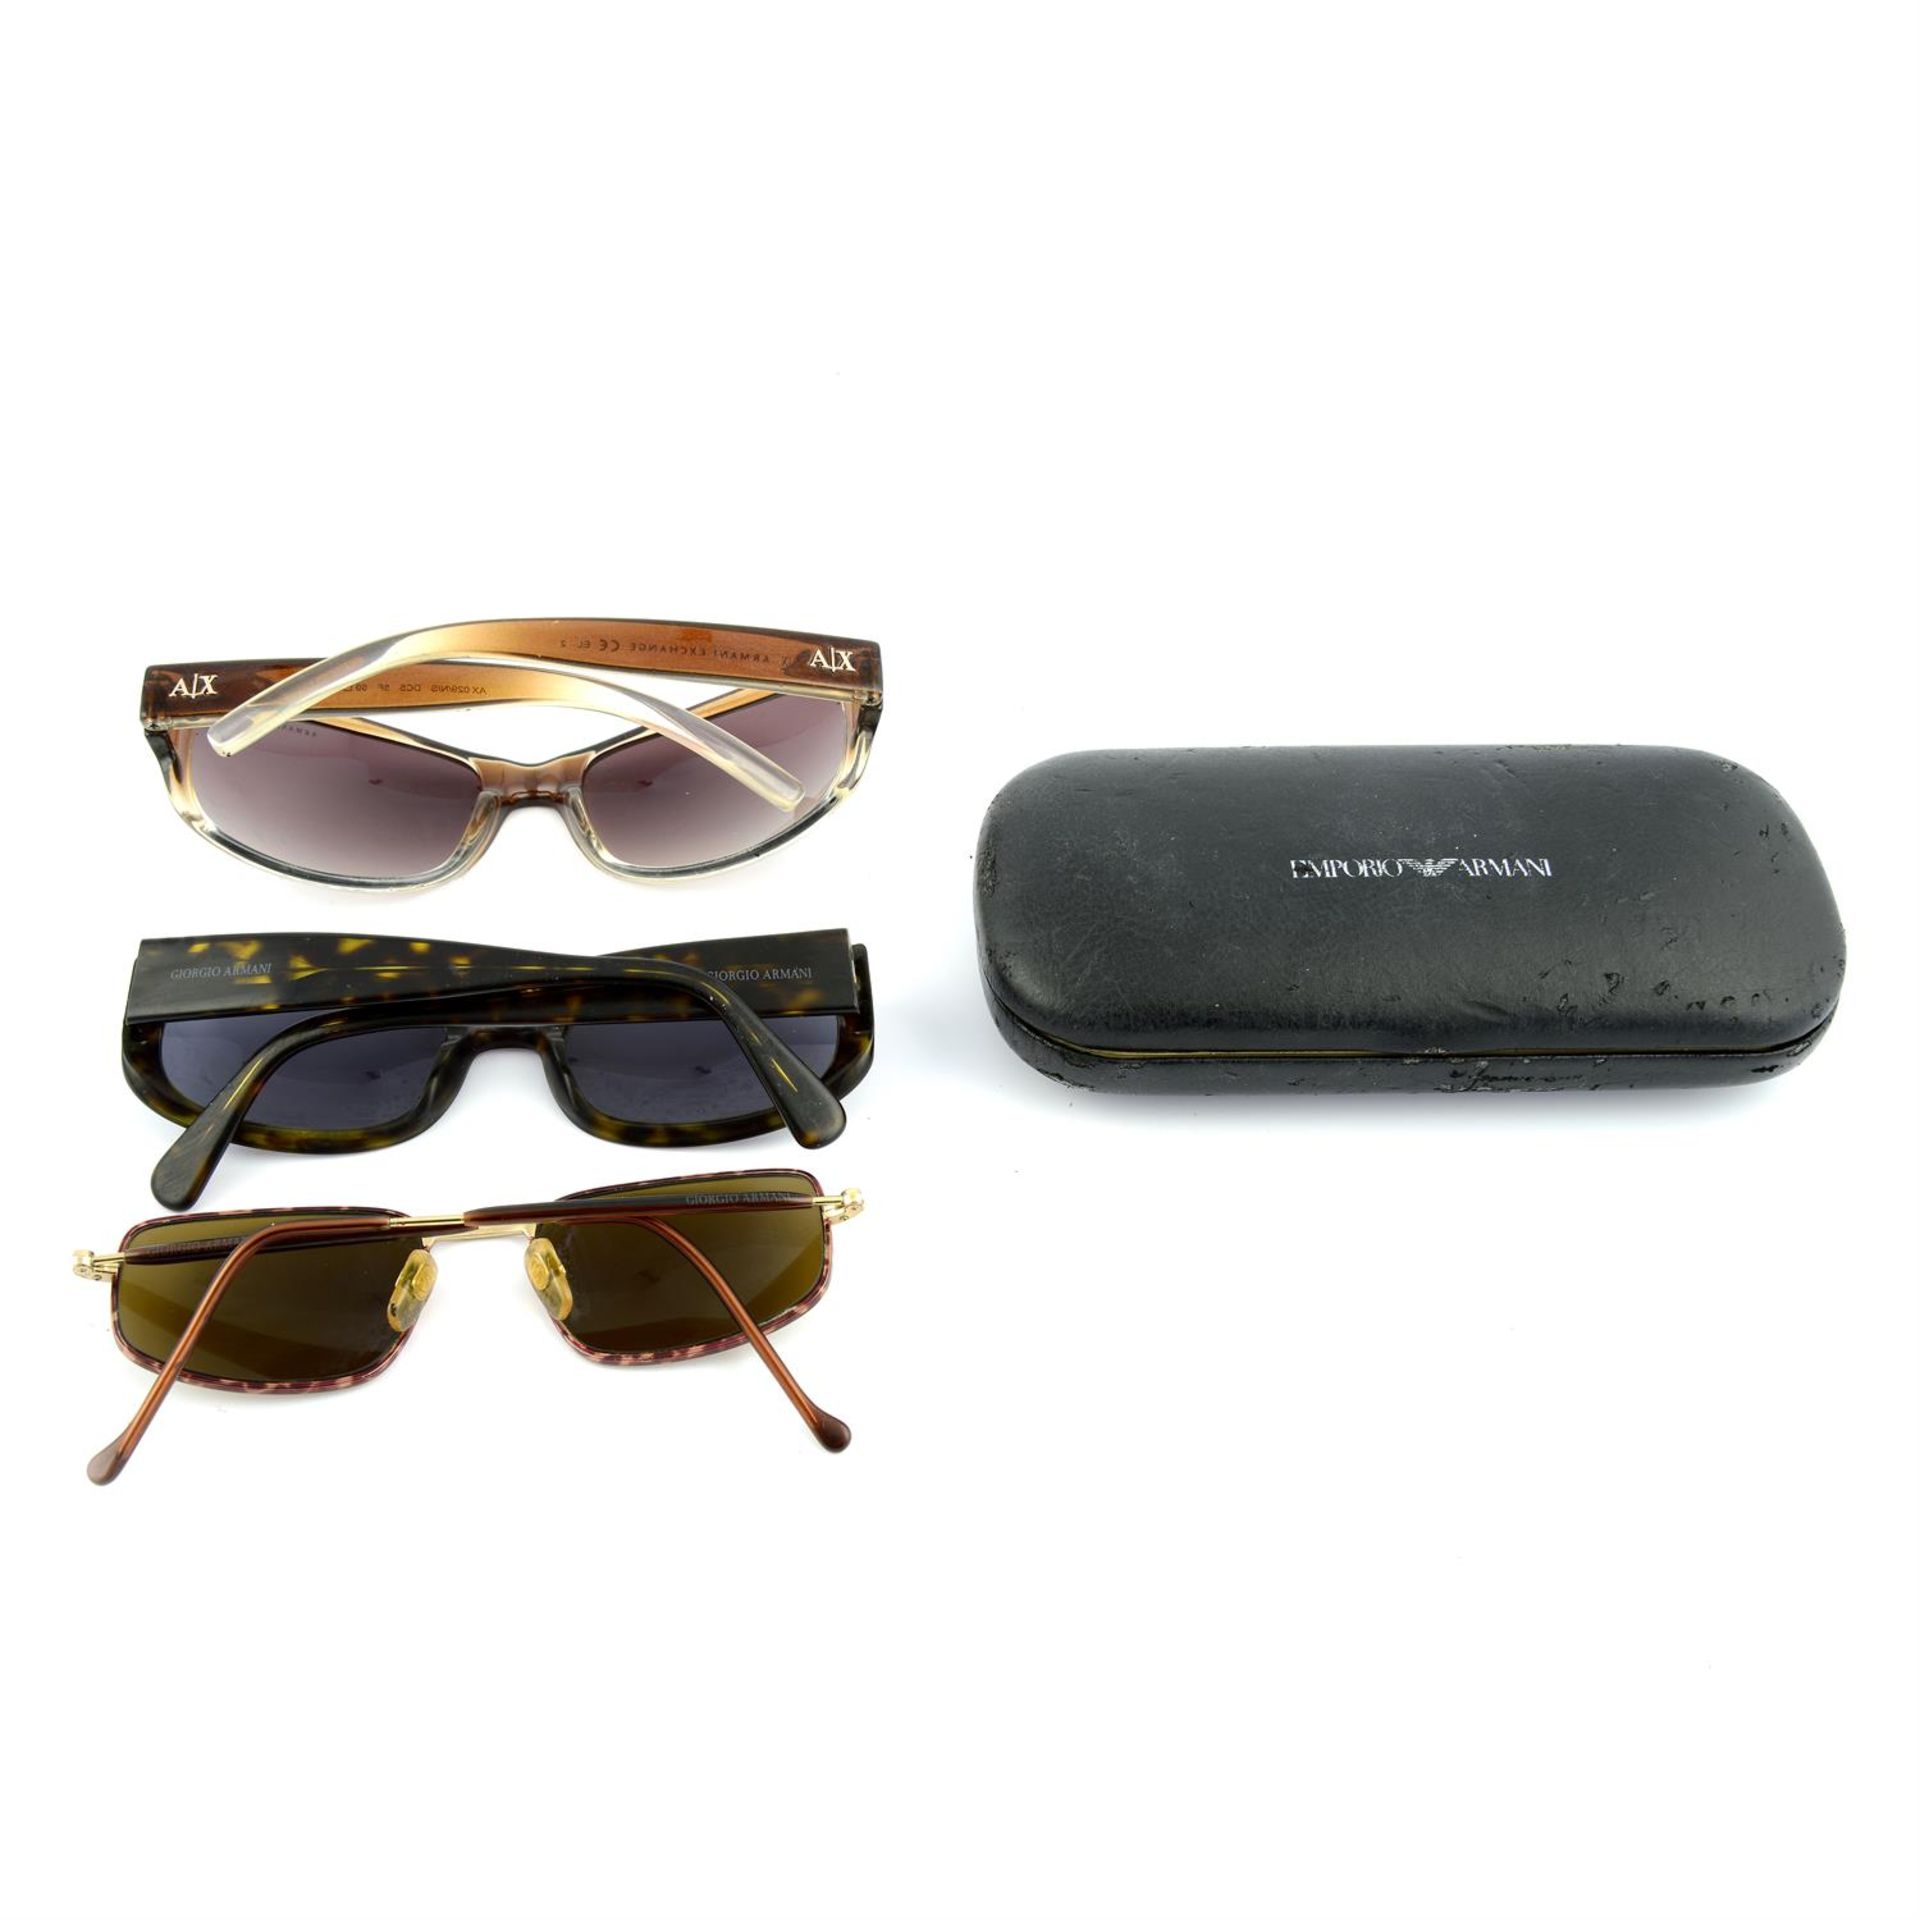 ARMANI - three pairs of sunglasses. - Image 2 of 2